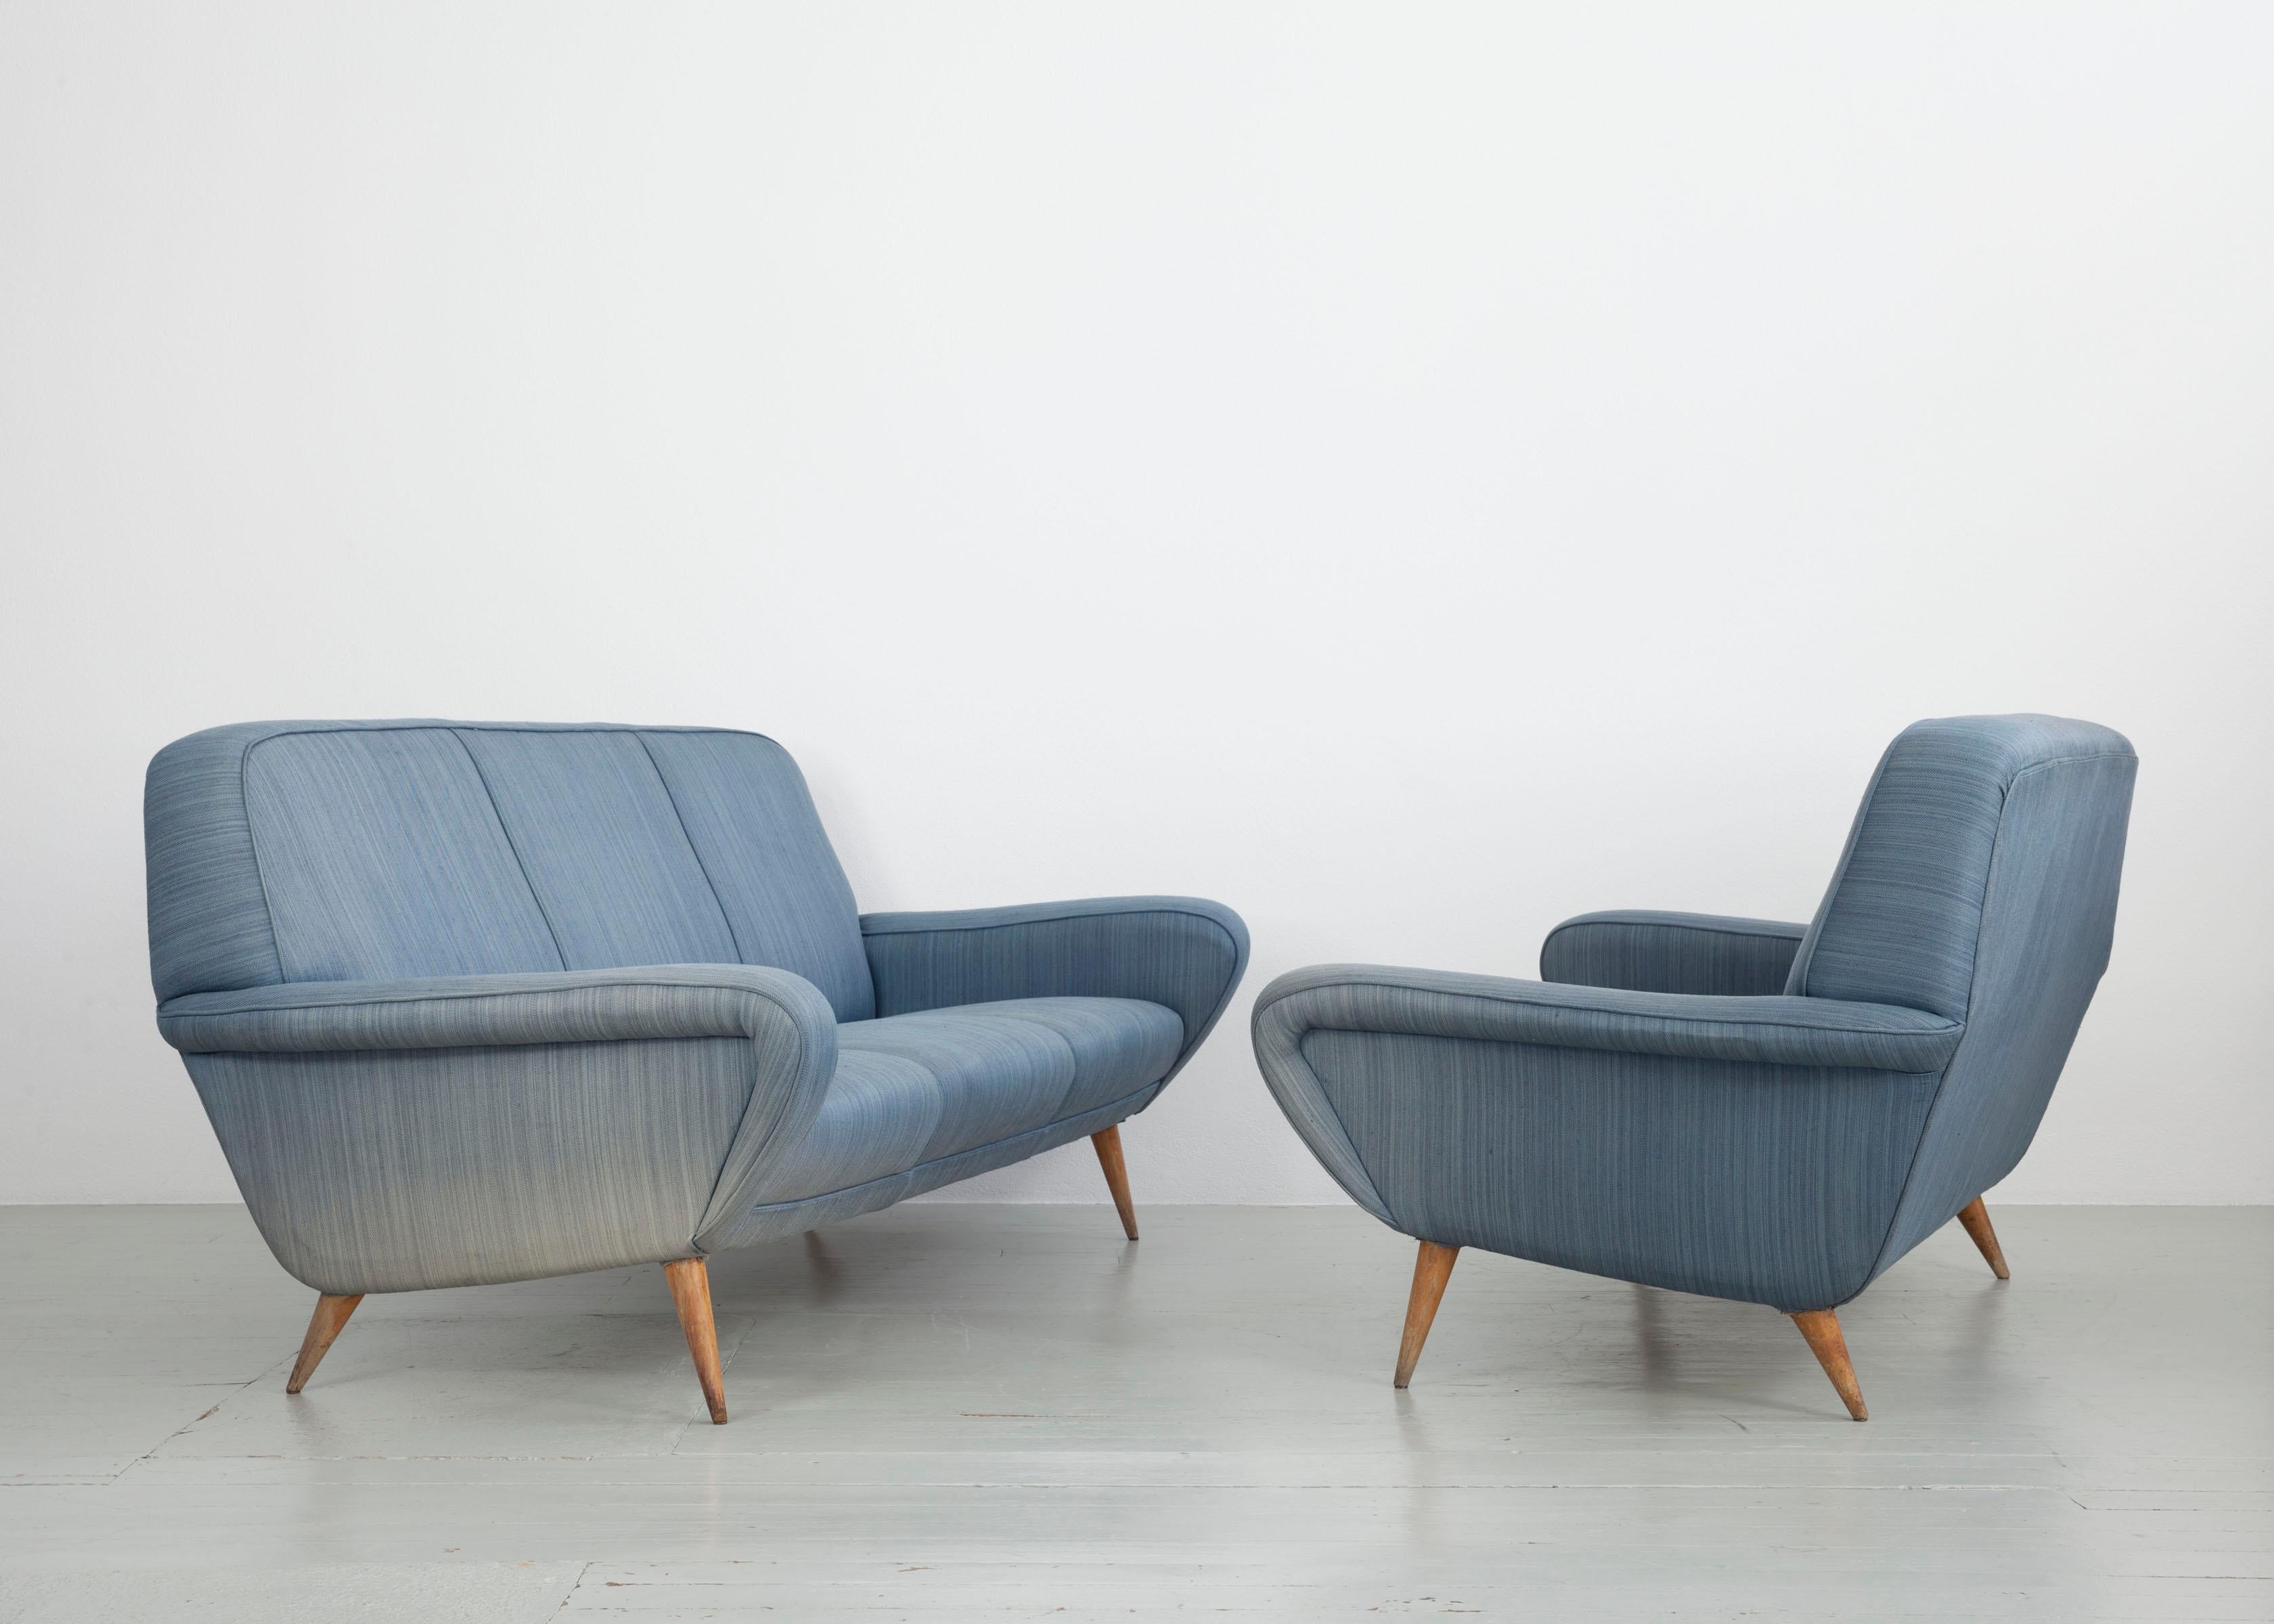 3-Sitz-Sofa Modell „830“ im Design Gianfranco Frattini, Cassina, 1950er Jahre (Moderne der Mitte des Jahrhunderts) im Angebot